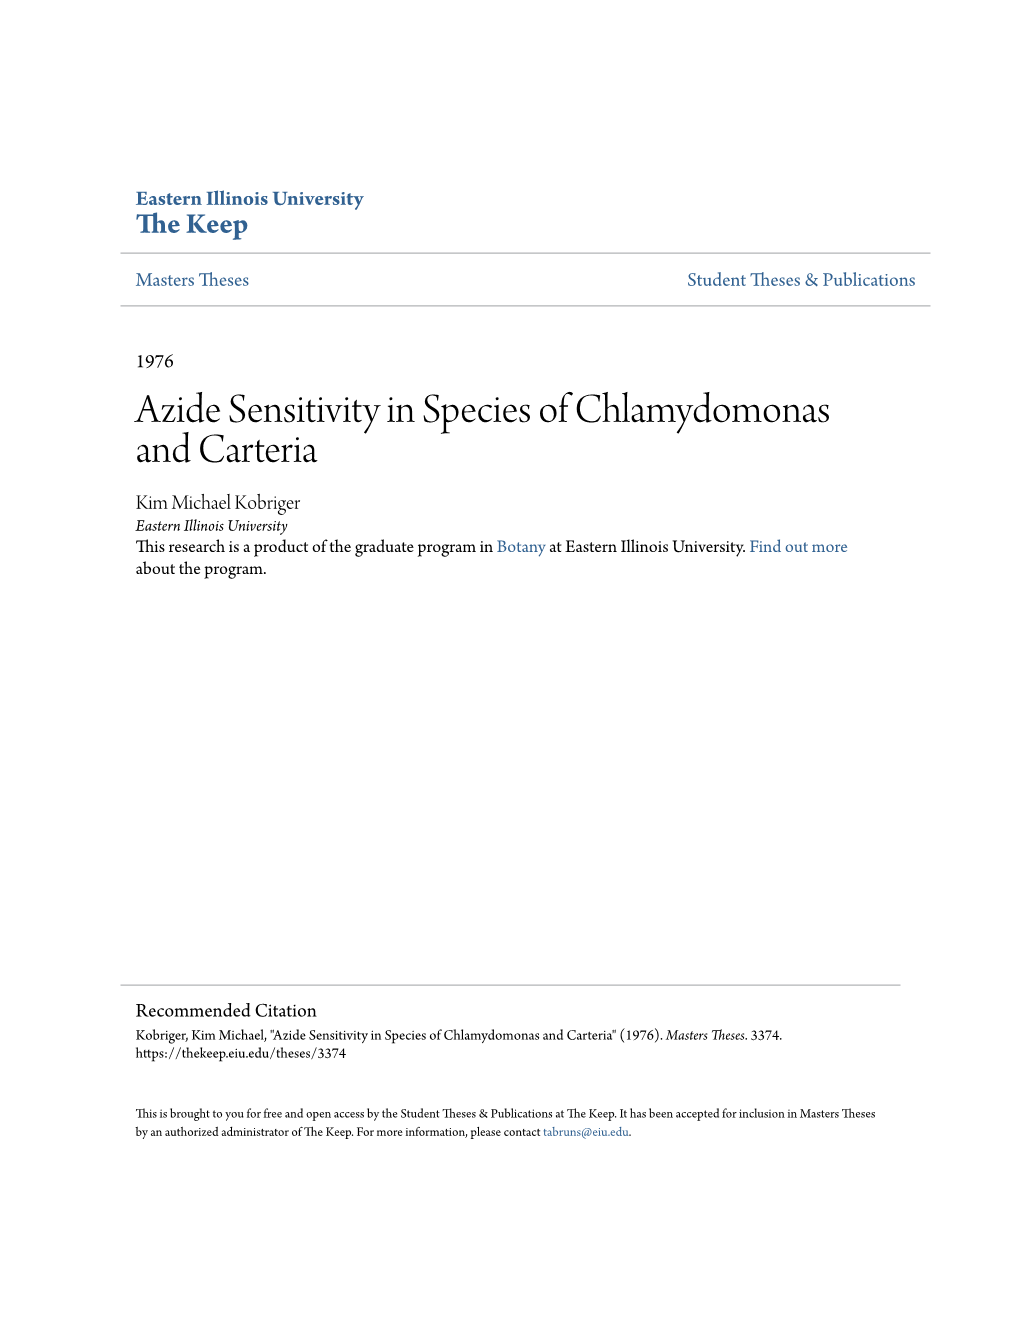 Azide Sensitivity in Species of Chlamydomonas and Carteria